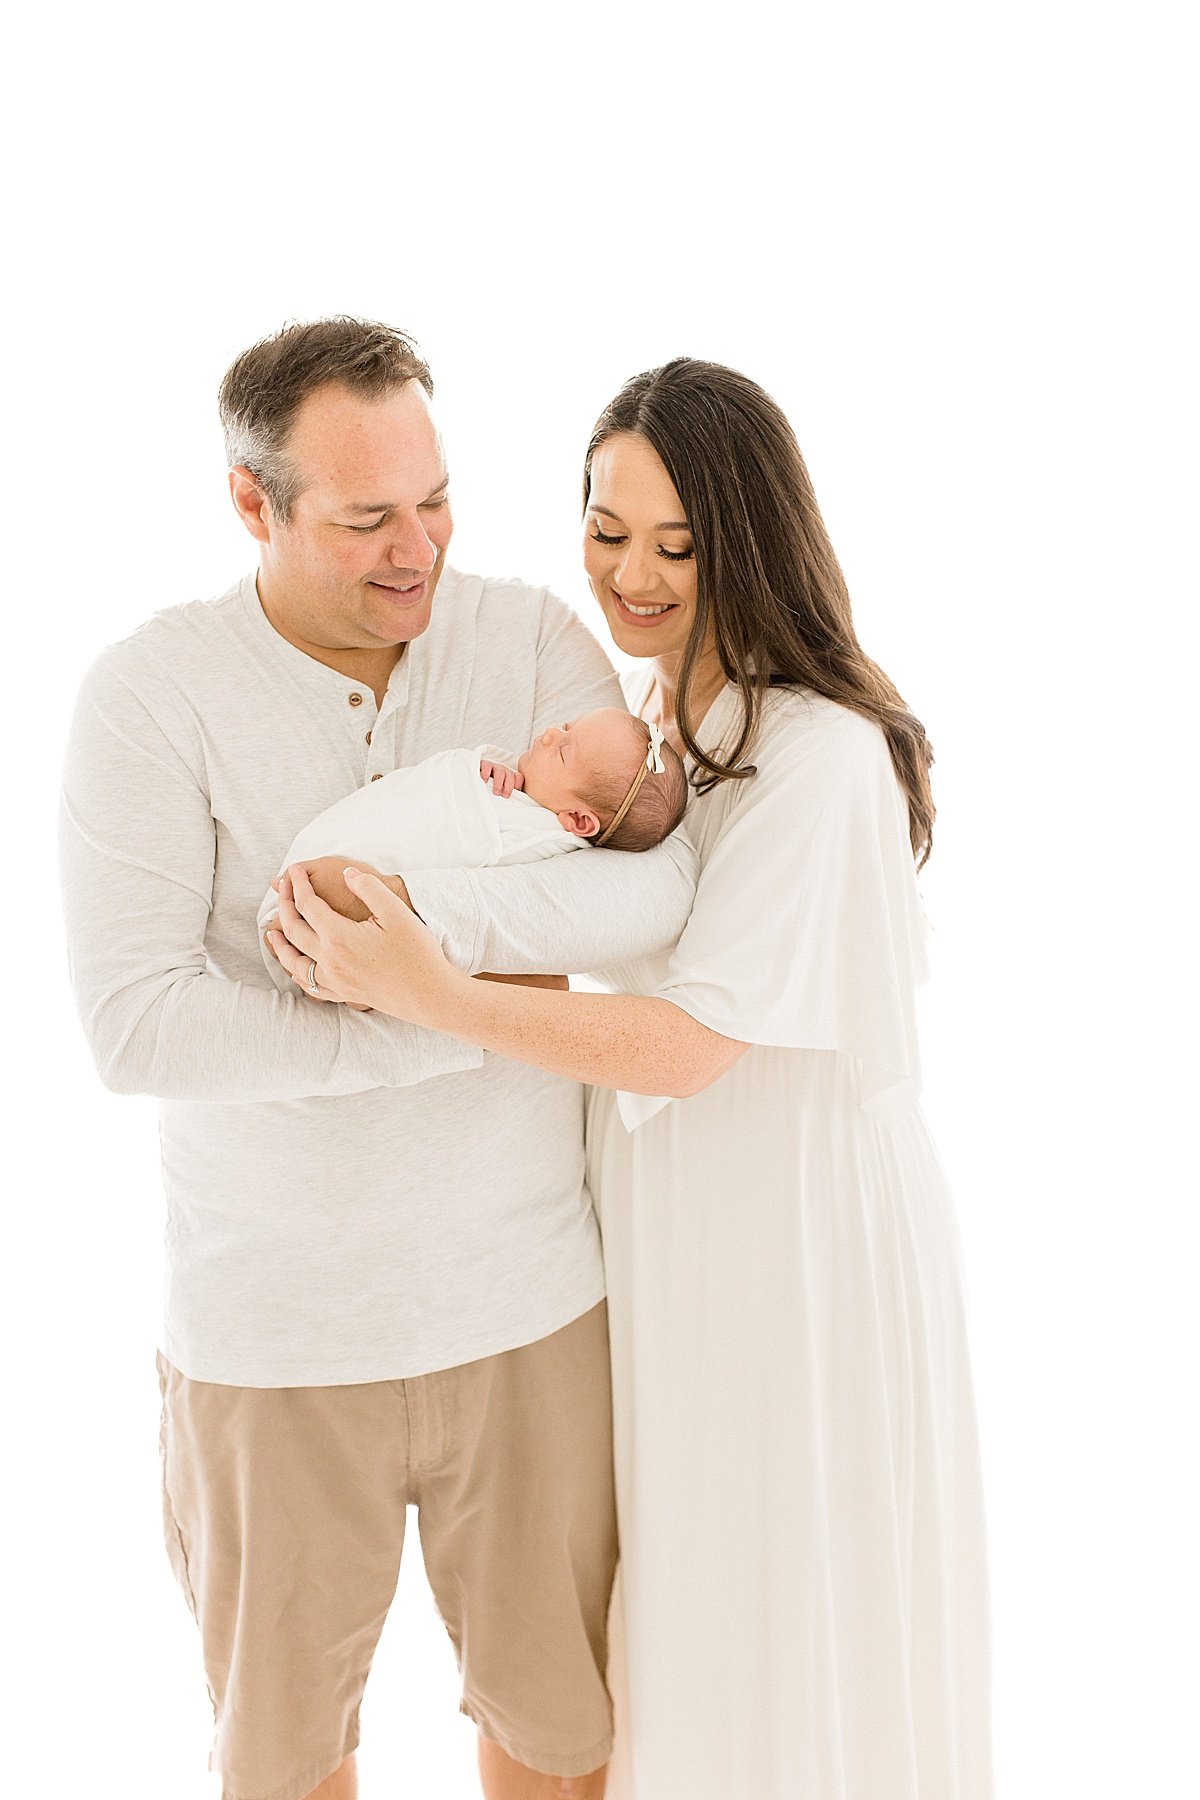 Mom and Dad craddling newborn baby daughter | Newport Beach Photographer Ambre Williams 